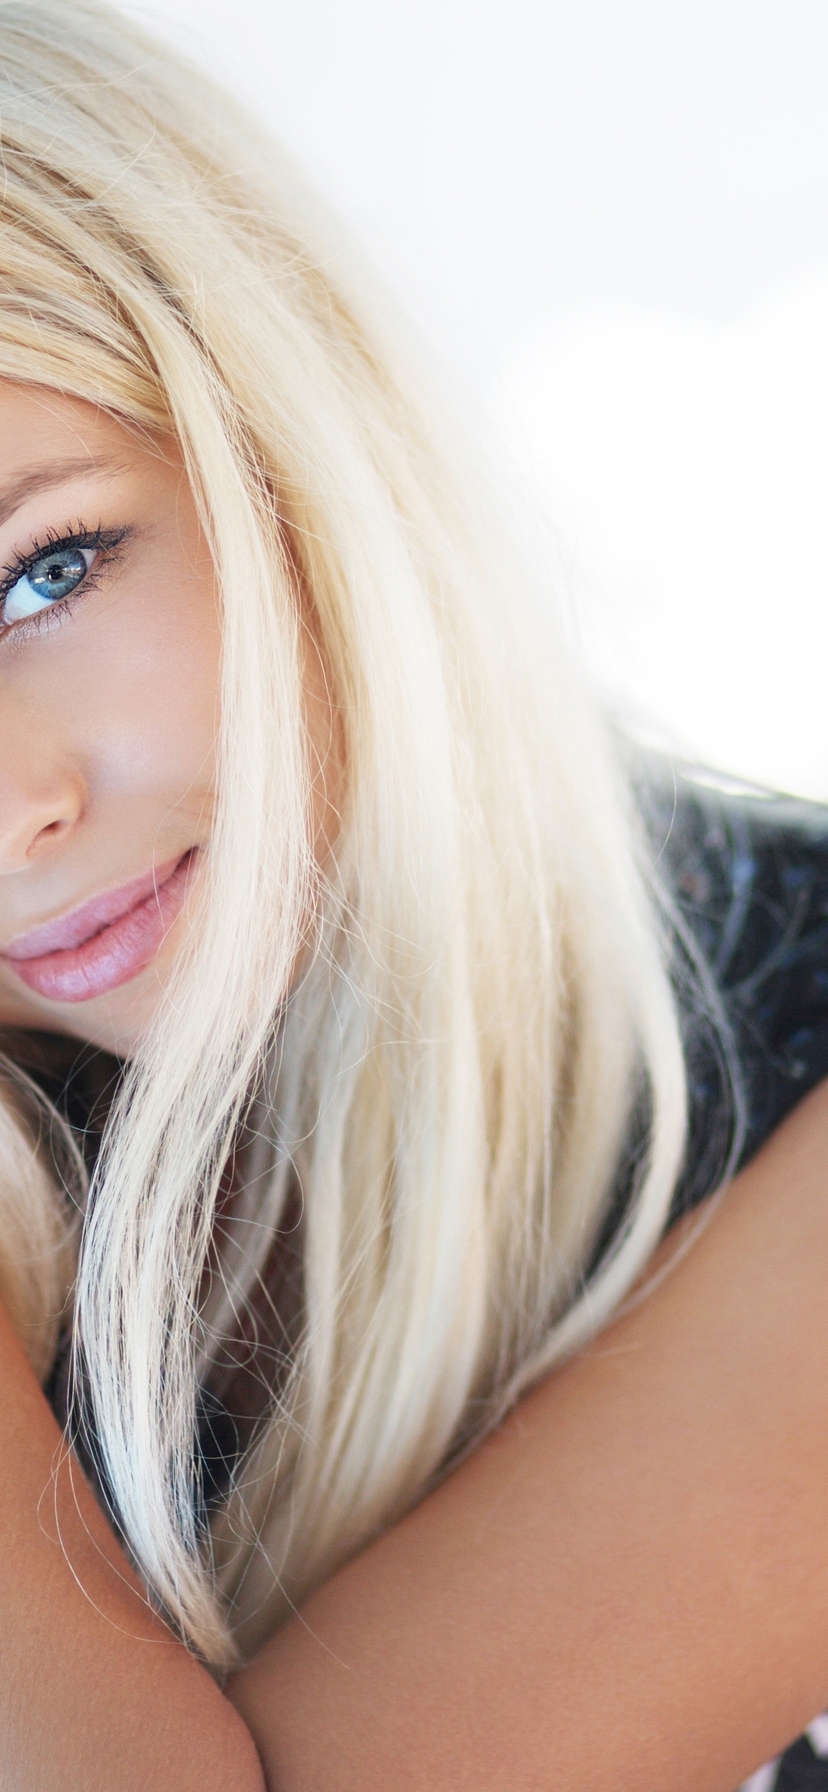 Image: Blonde, girl, face, eyes, smile